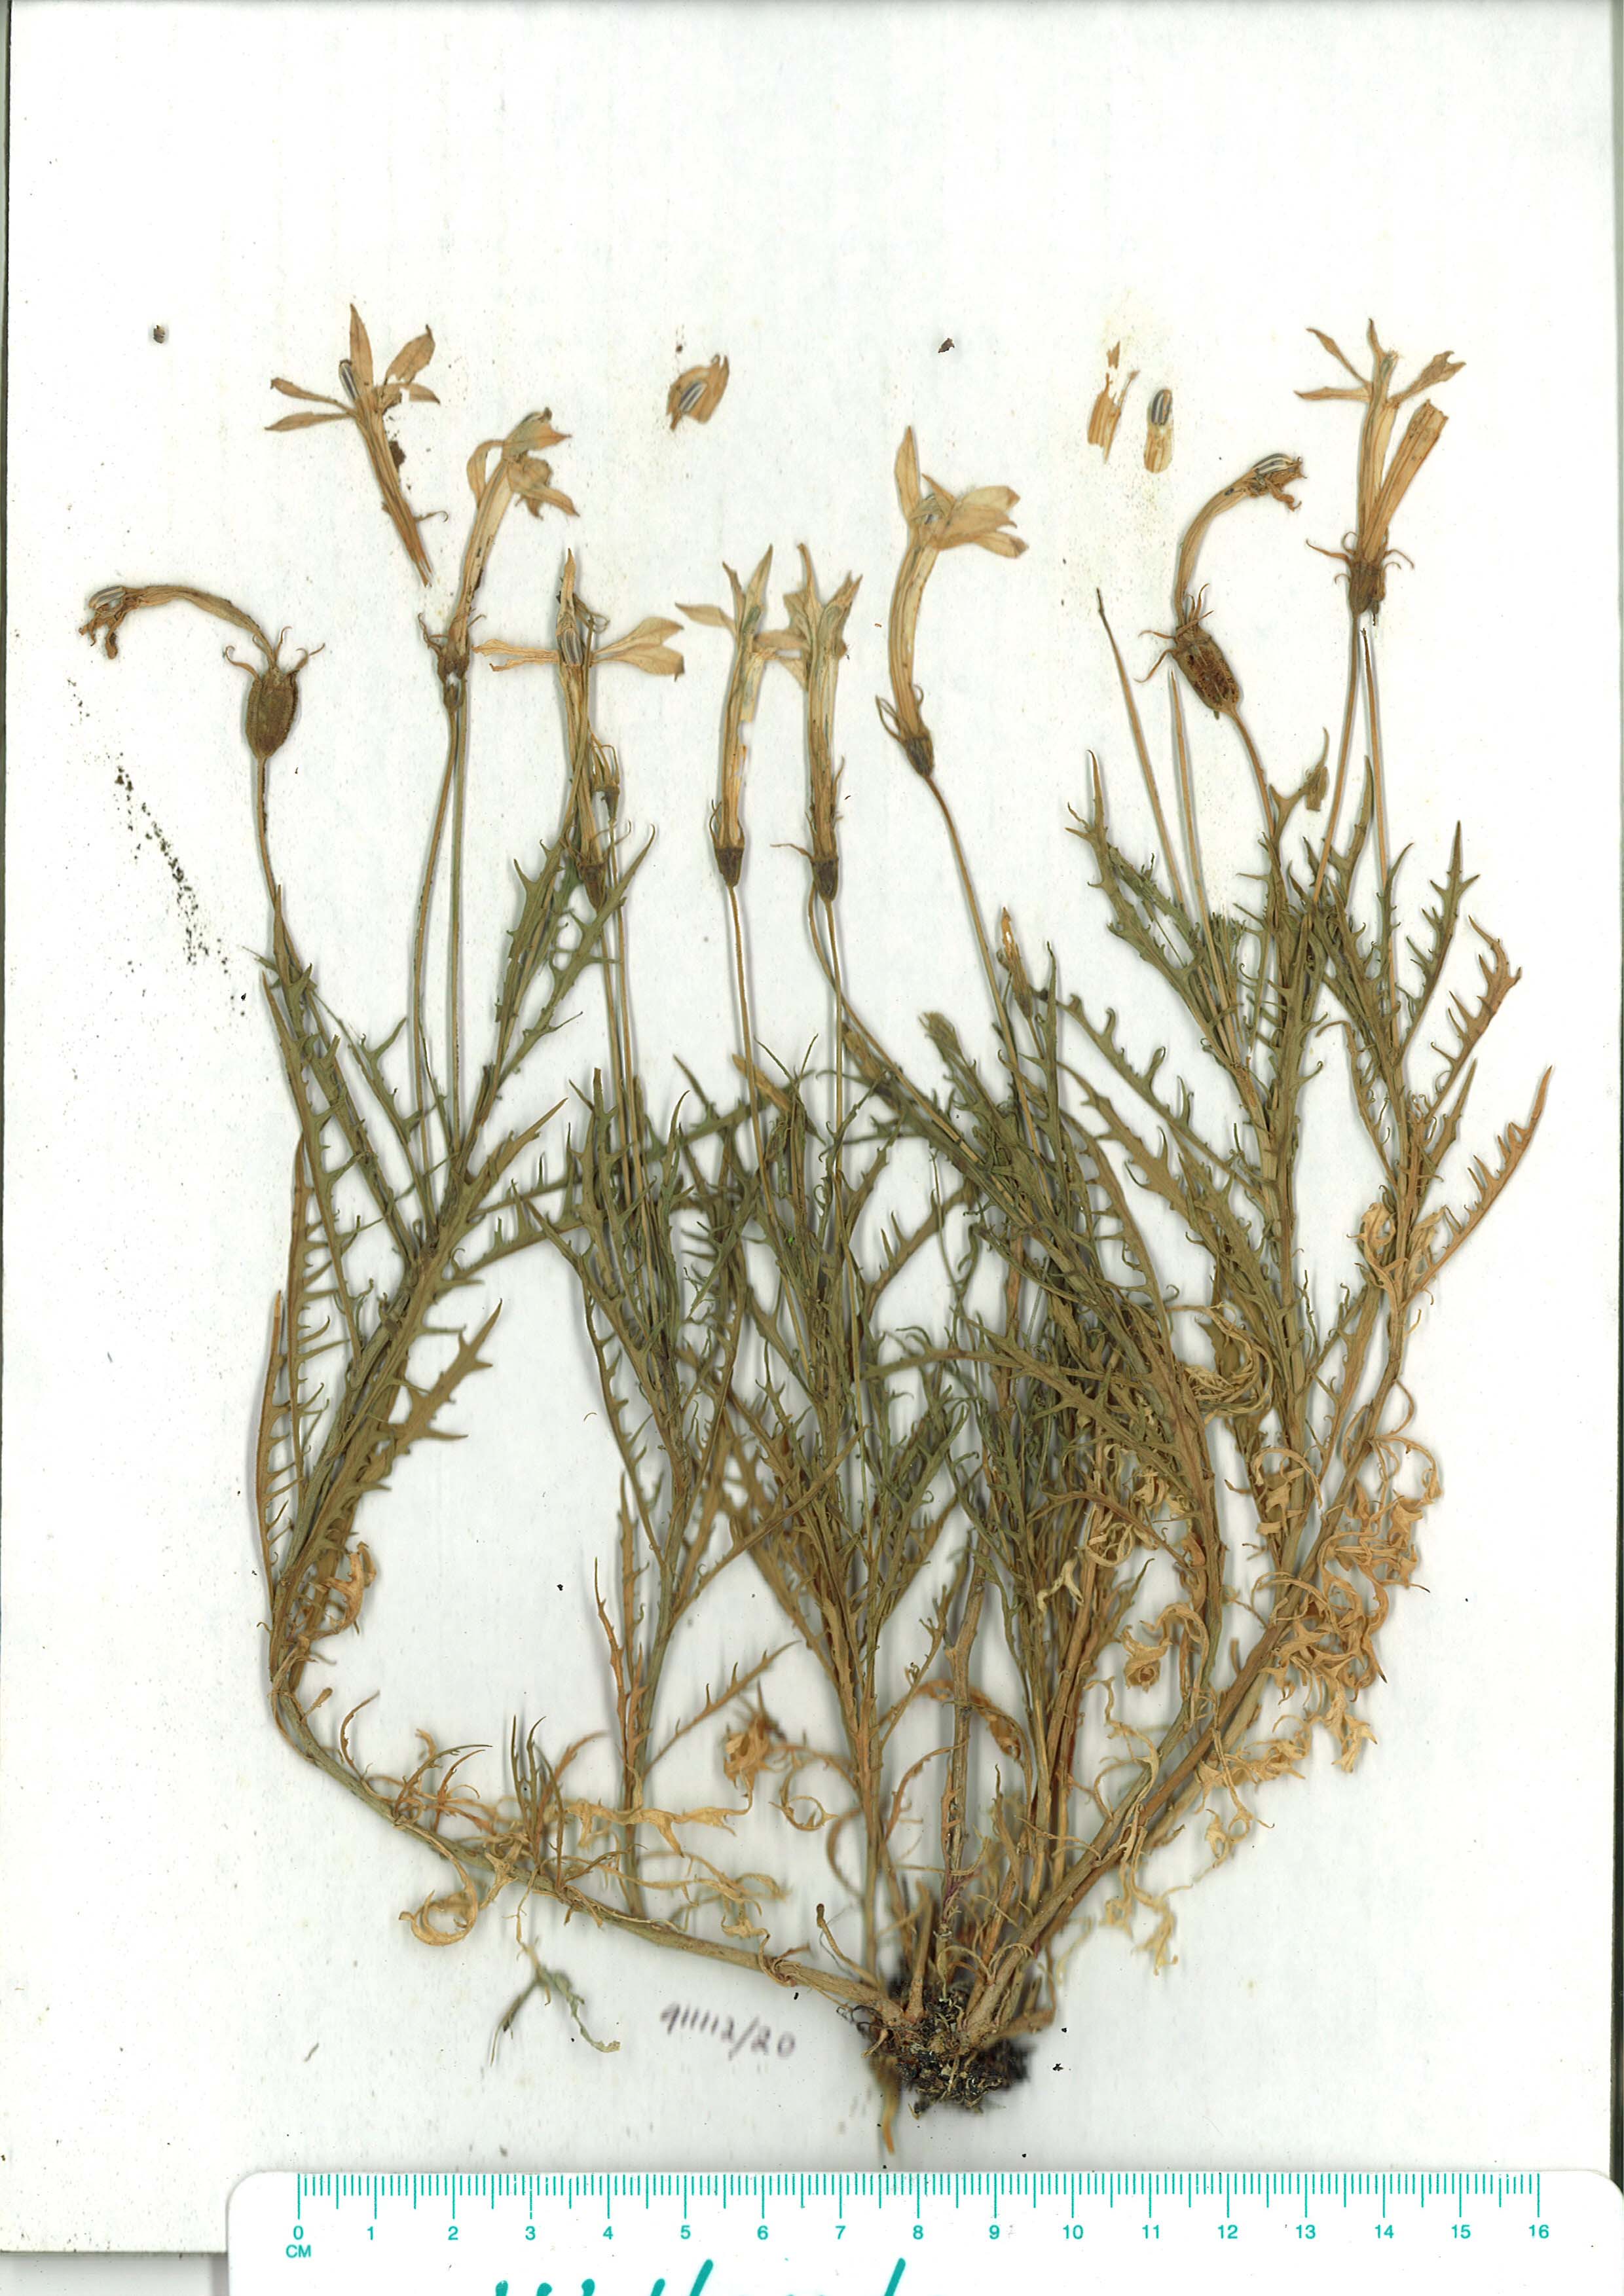 Scanned herbarium image of Isotoma axillaris